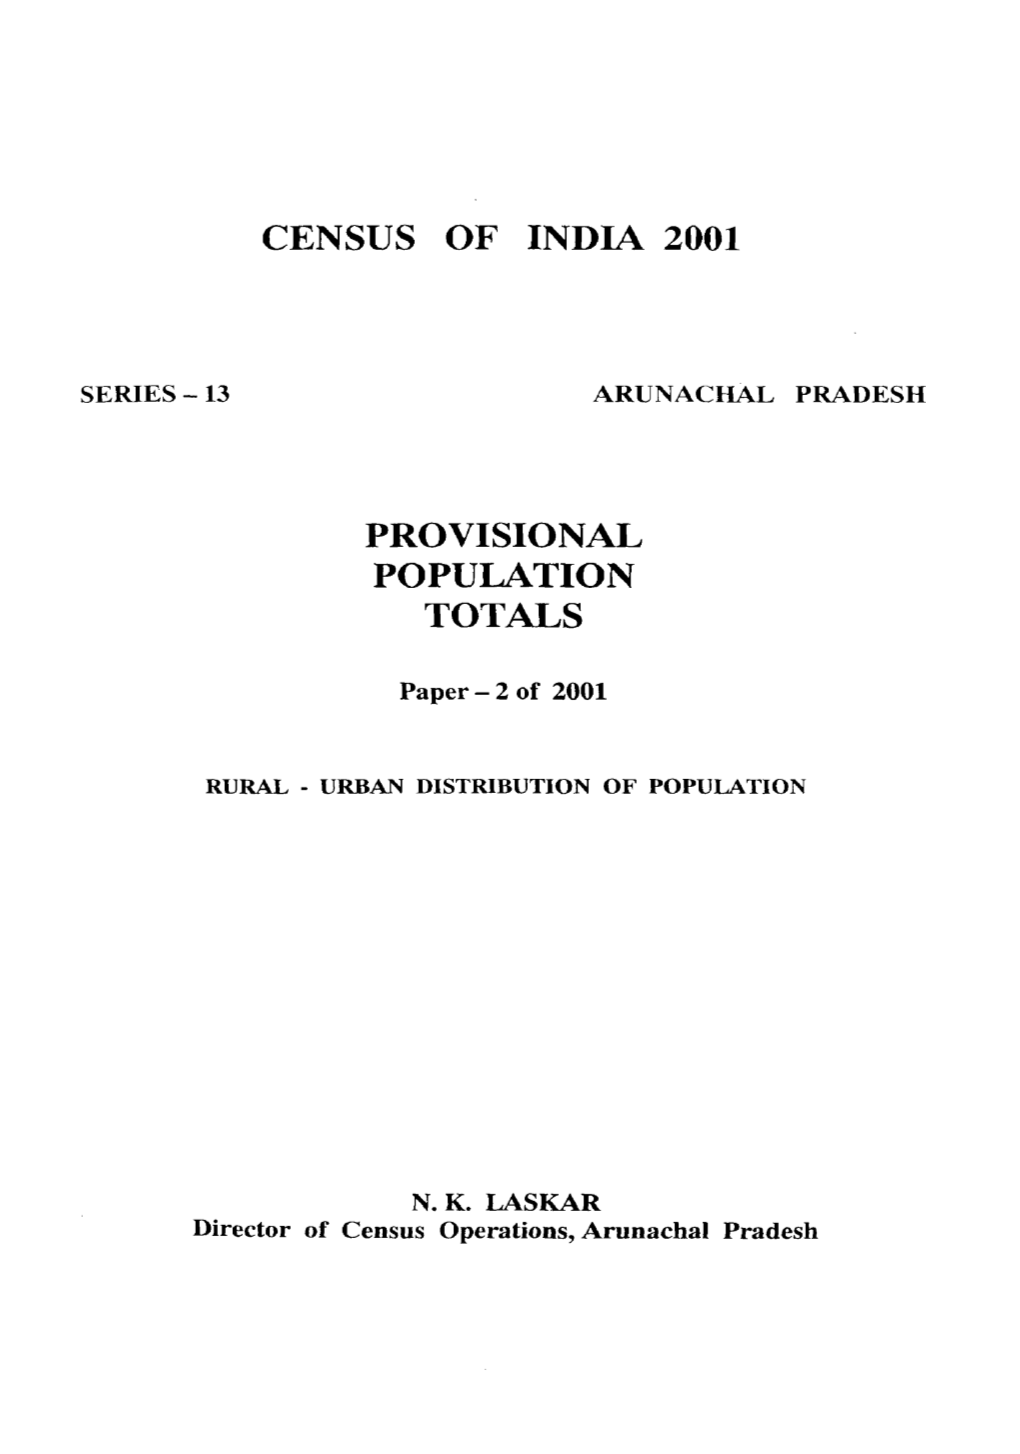 Provisional Population Totals, Series-13, Arunachal Pradesh